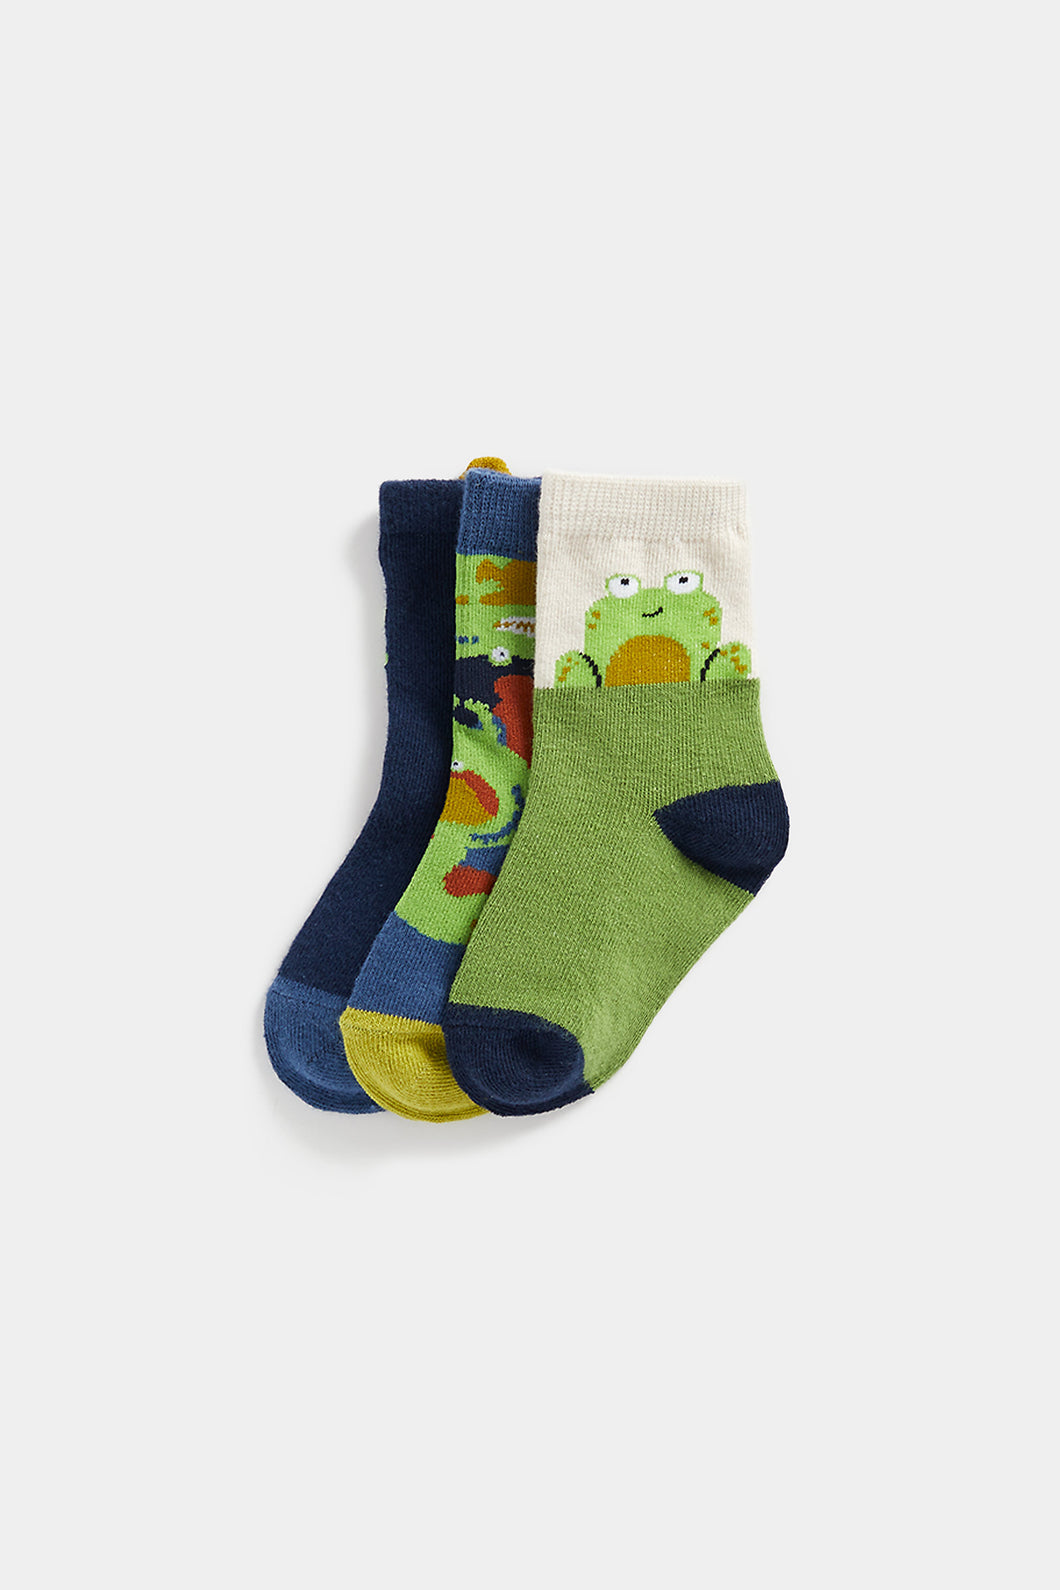 Mothercare Animal Socks - 3 Pack